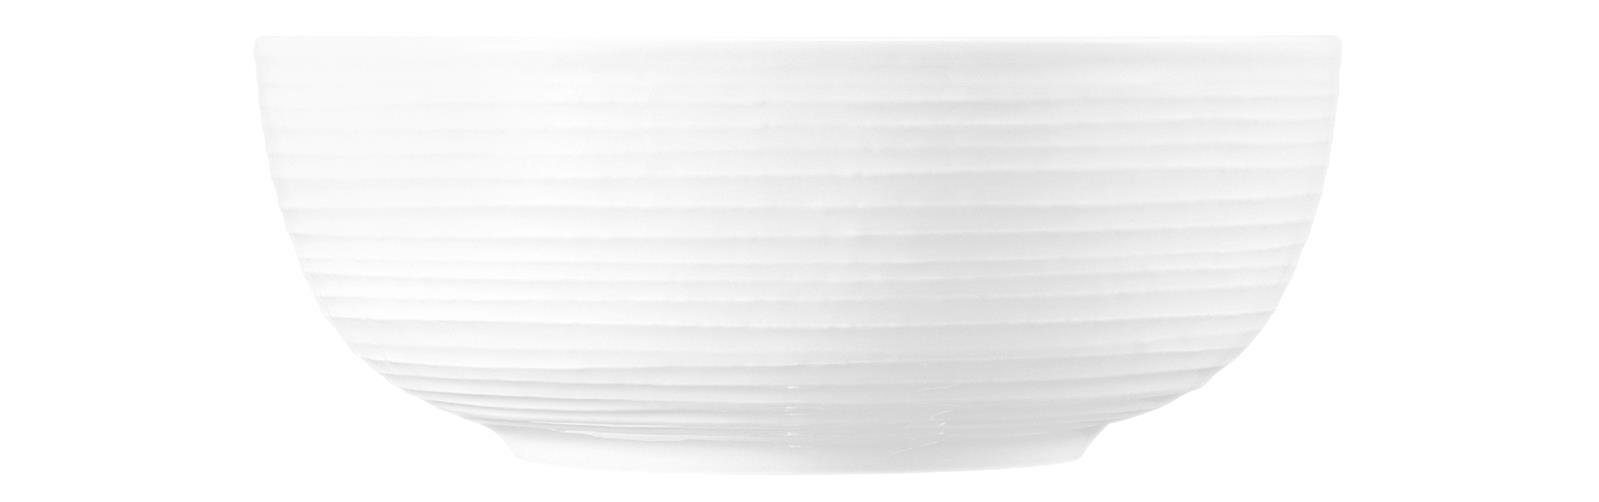 Seltmann Weiden Schüssel Terra weiß Foodbowls 20 cm, Porzellan, (1 Foodbowl)